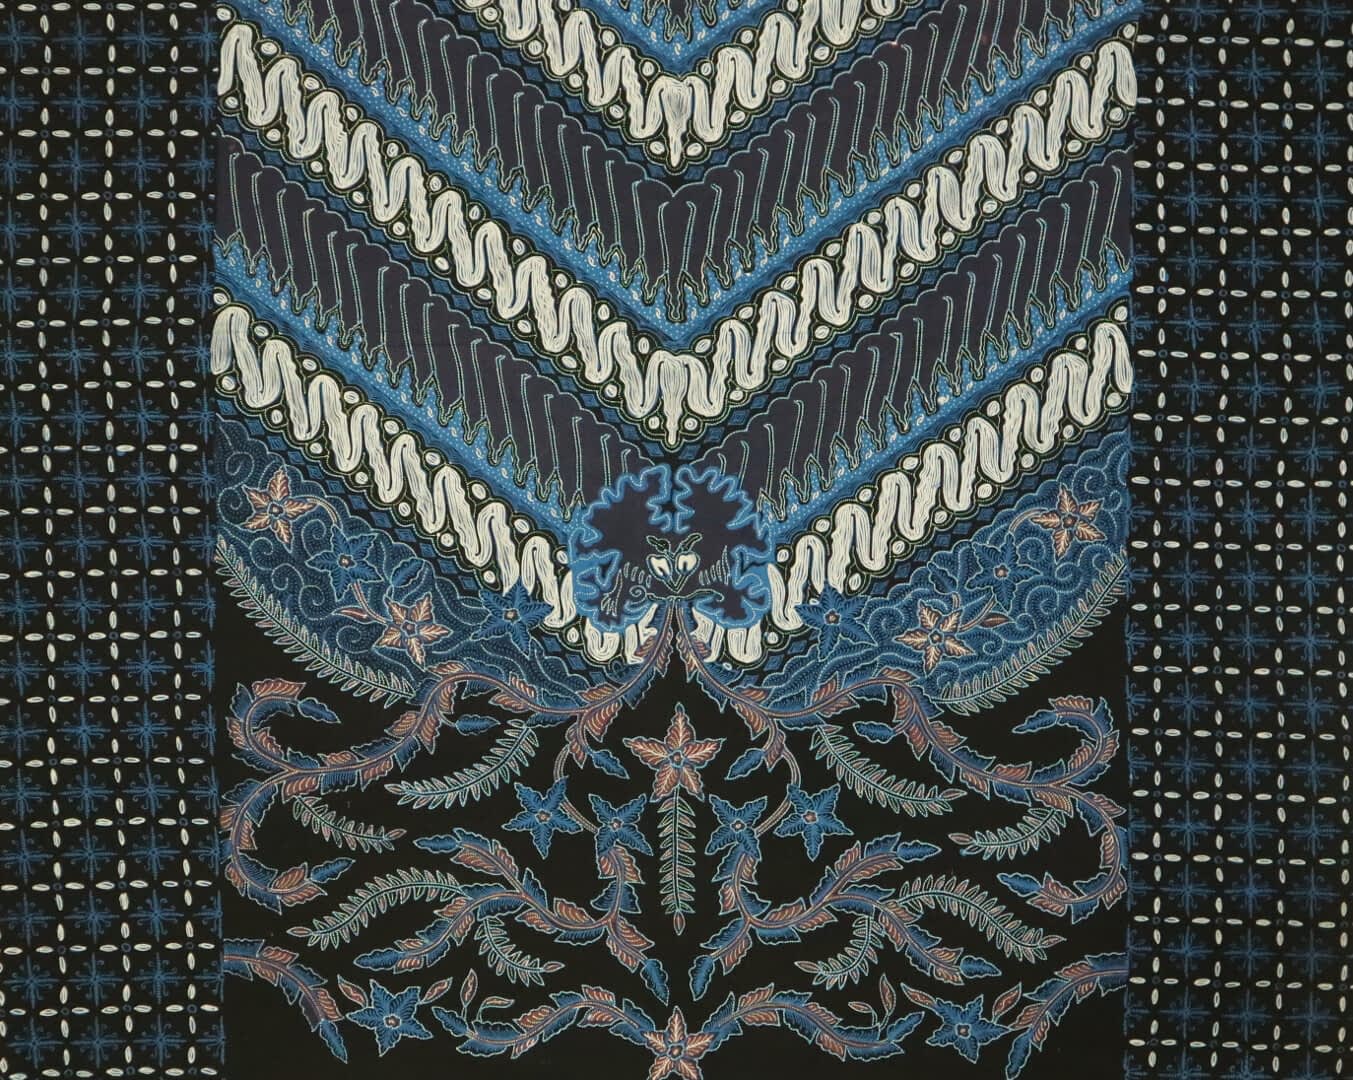  Batik  Parang  Baron Encephalon  Biru Mendung I Batik  Sejawat